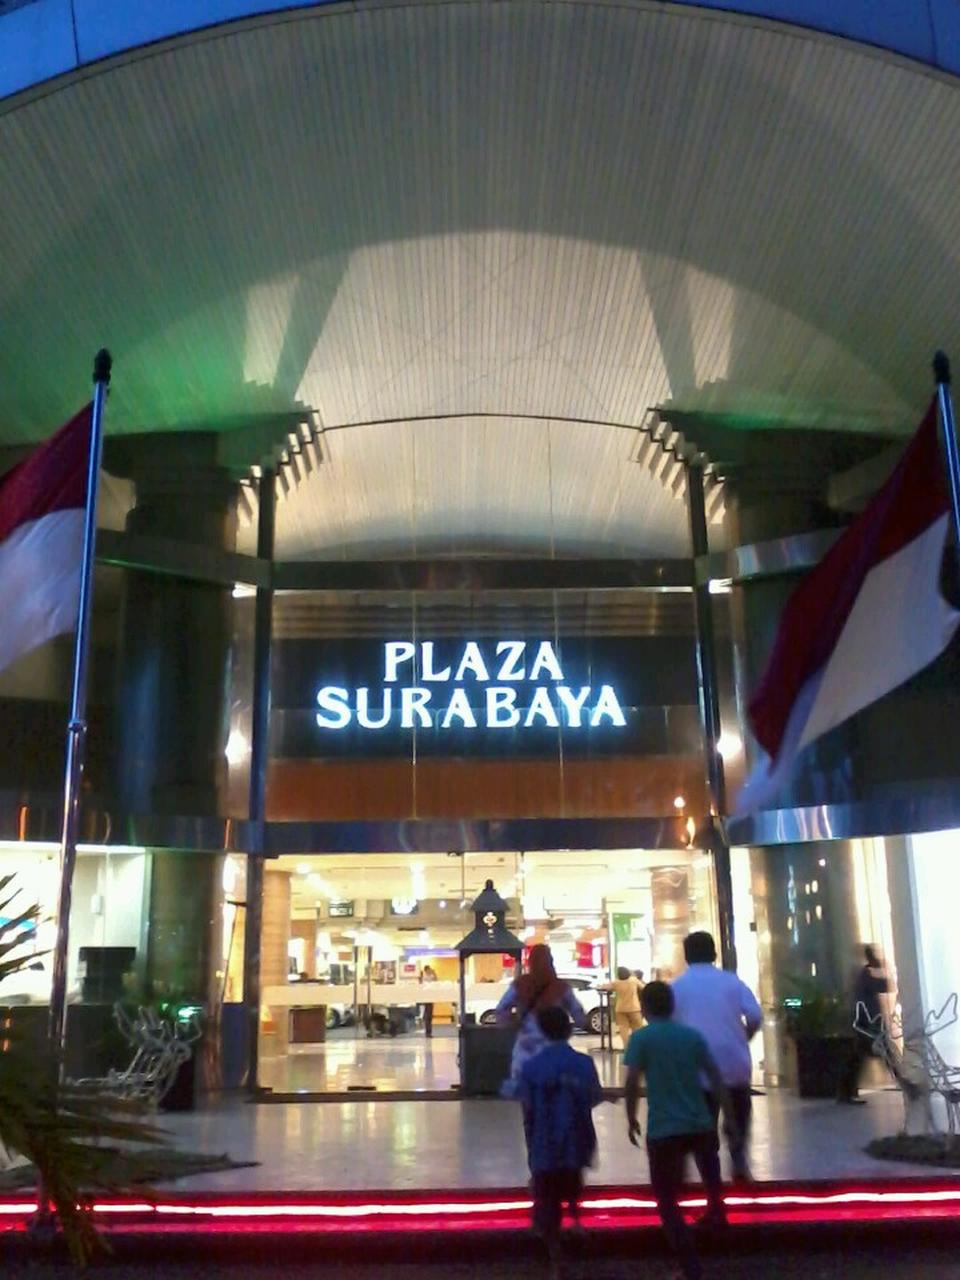 Alamat Delta Plaza Surabaya Sejarah Angker Asal Usul 